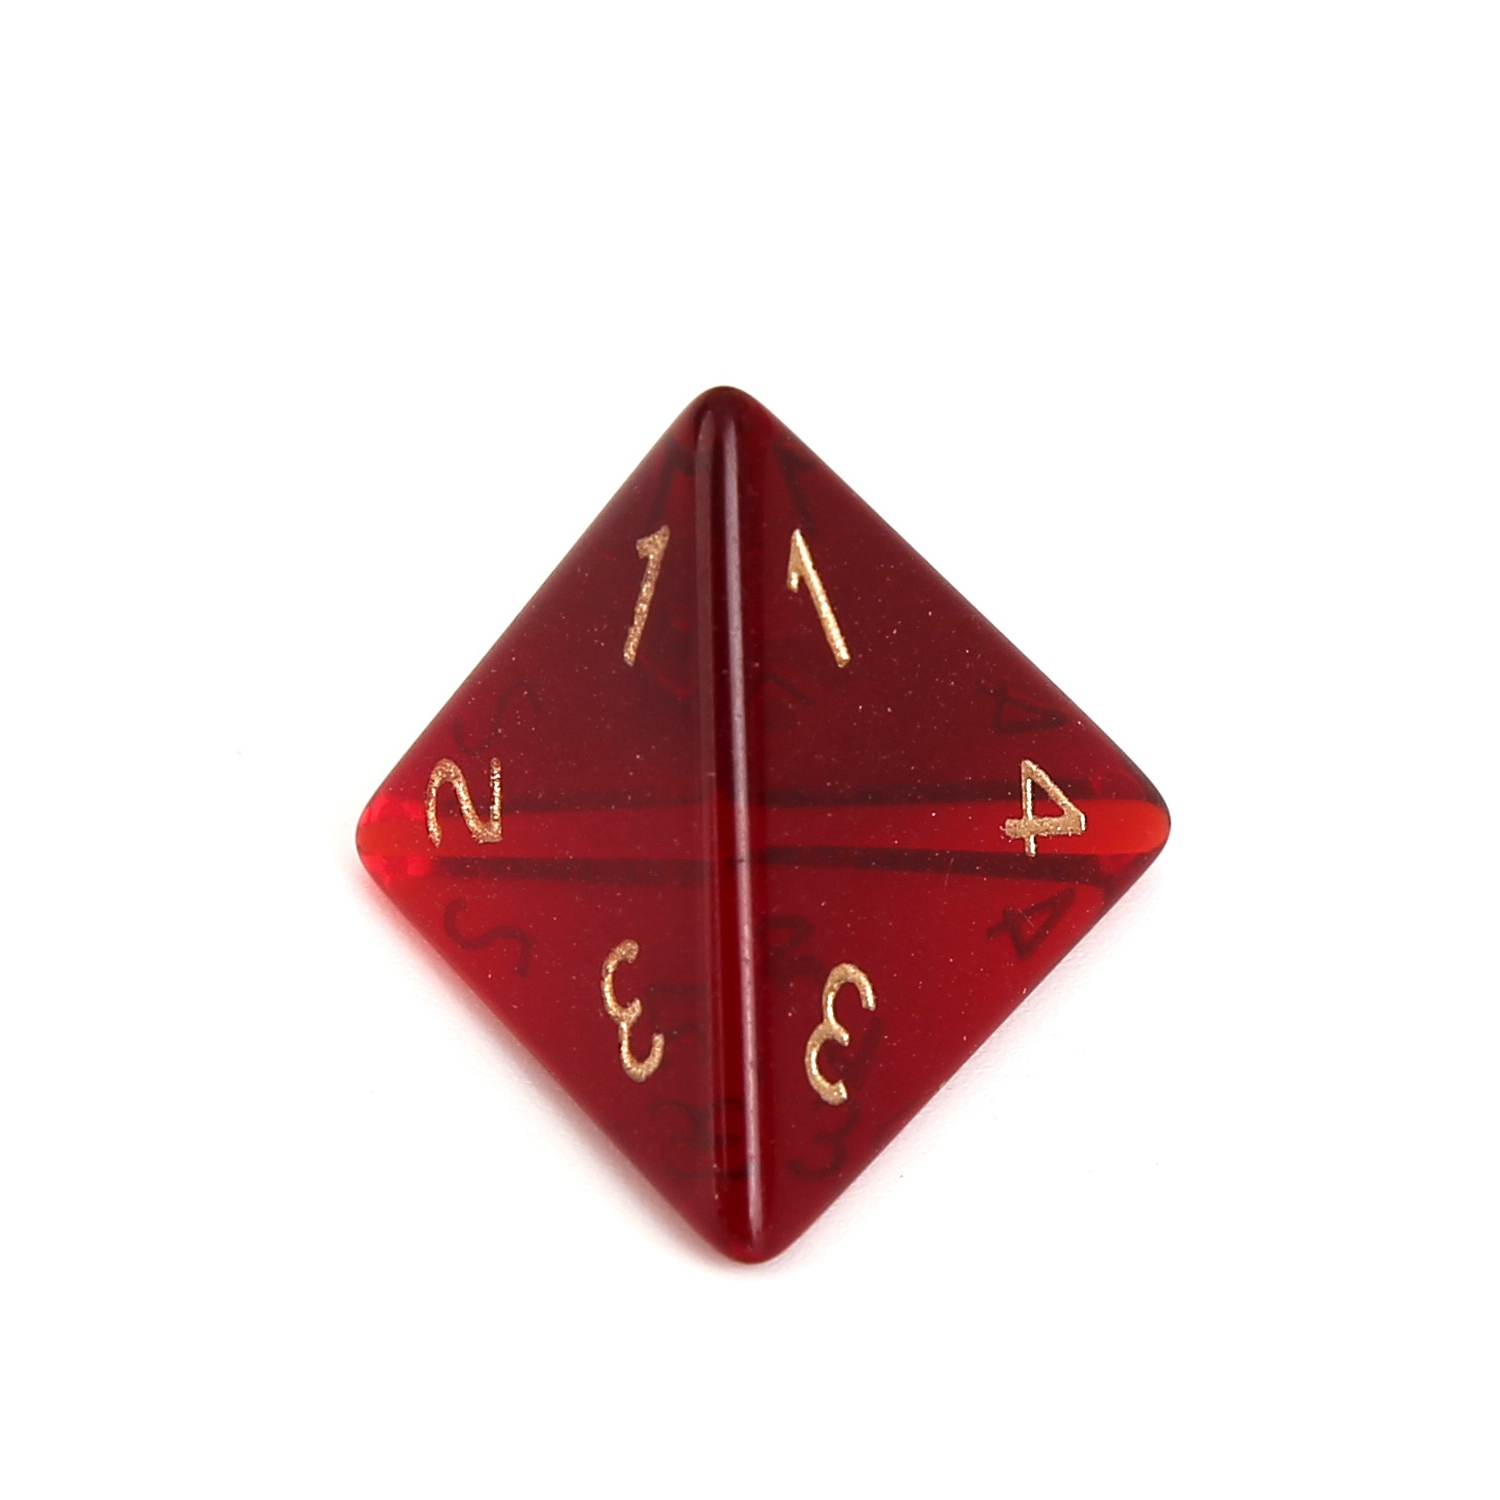 1:D4 icosahedron